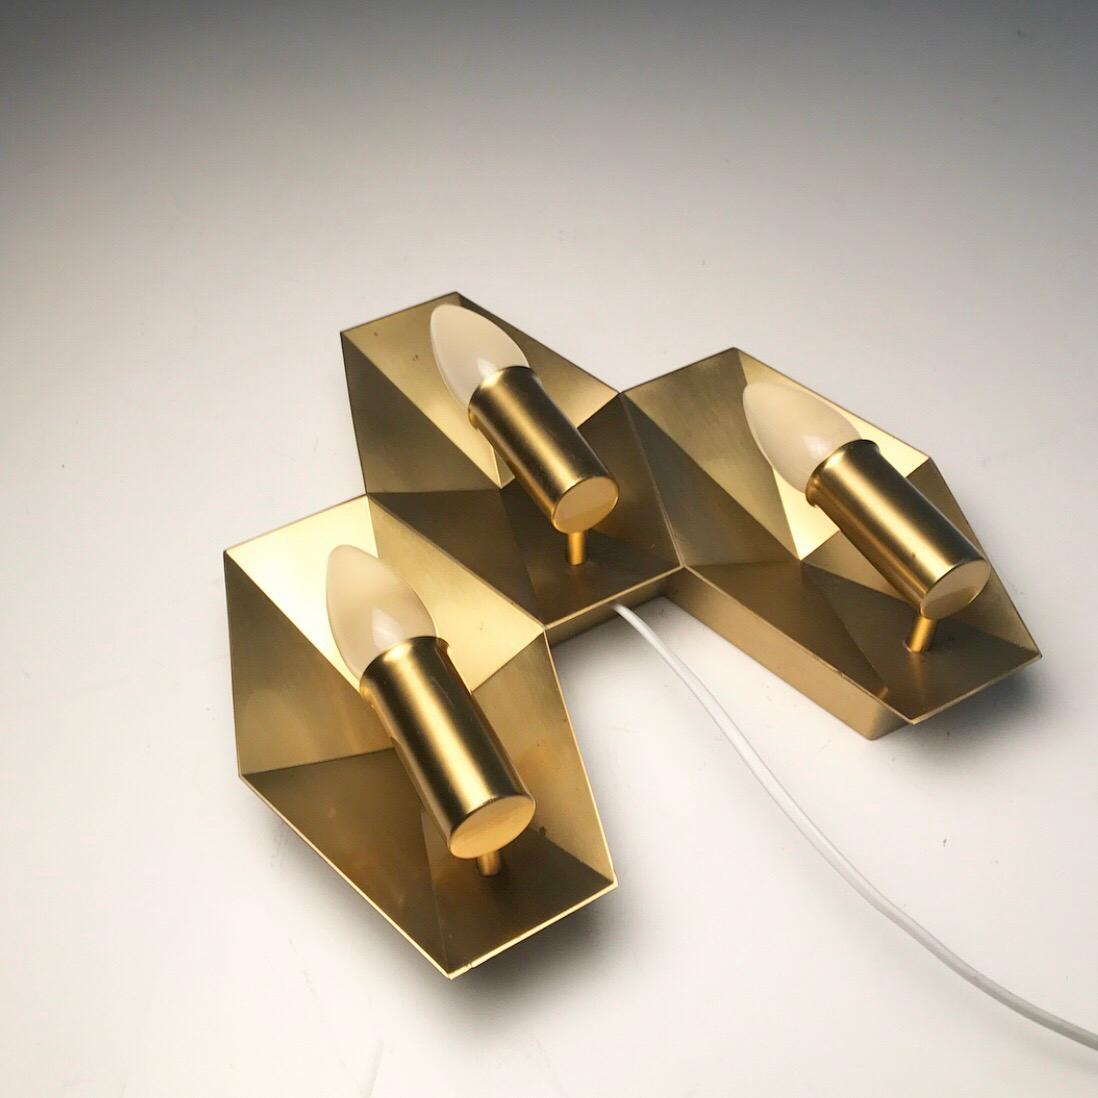 Elegant candelabra brass wall sconce made by renowned Fog & Morup, Denmark, 1950s.

Designed by Rolf Graae, danish organ builder and designer of three different lighting designs. 

The Prisme sconce (prism light) was designed back in 1950s for